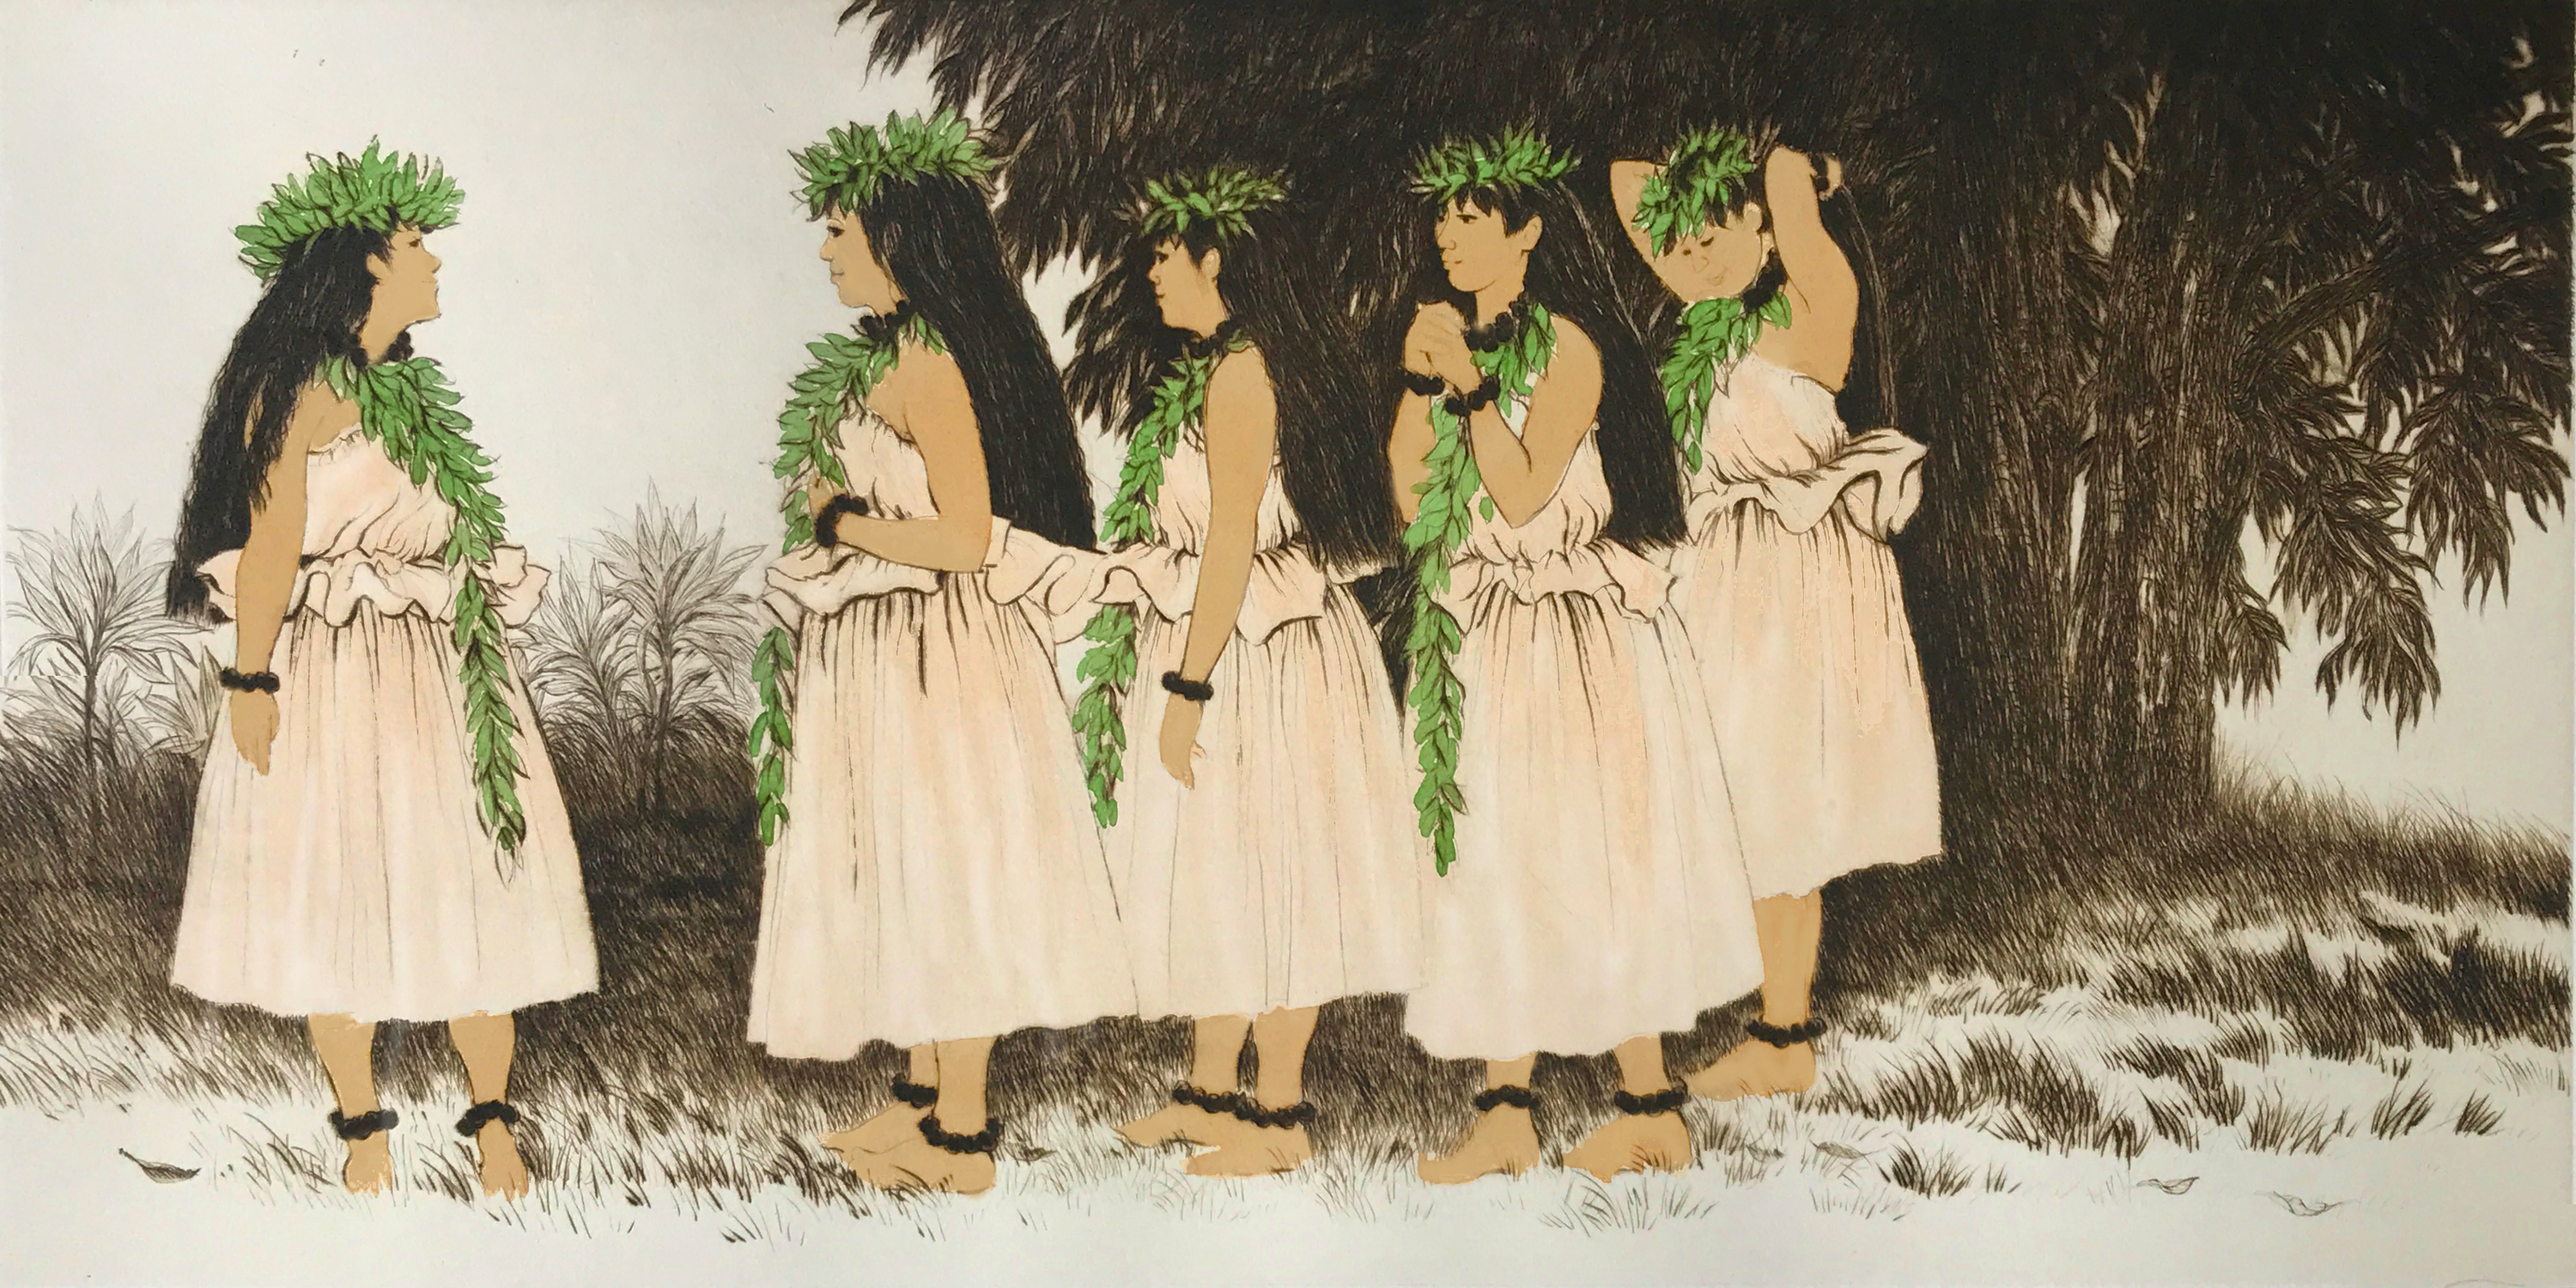 Emily deisroth   hula sisters   watercolored   carol collette. asf brzr2o